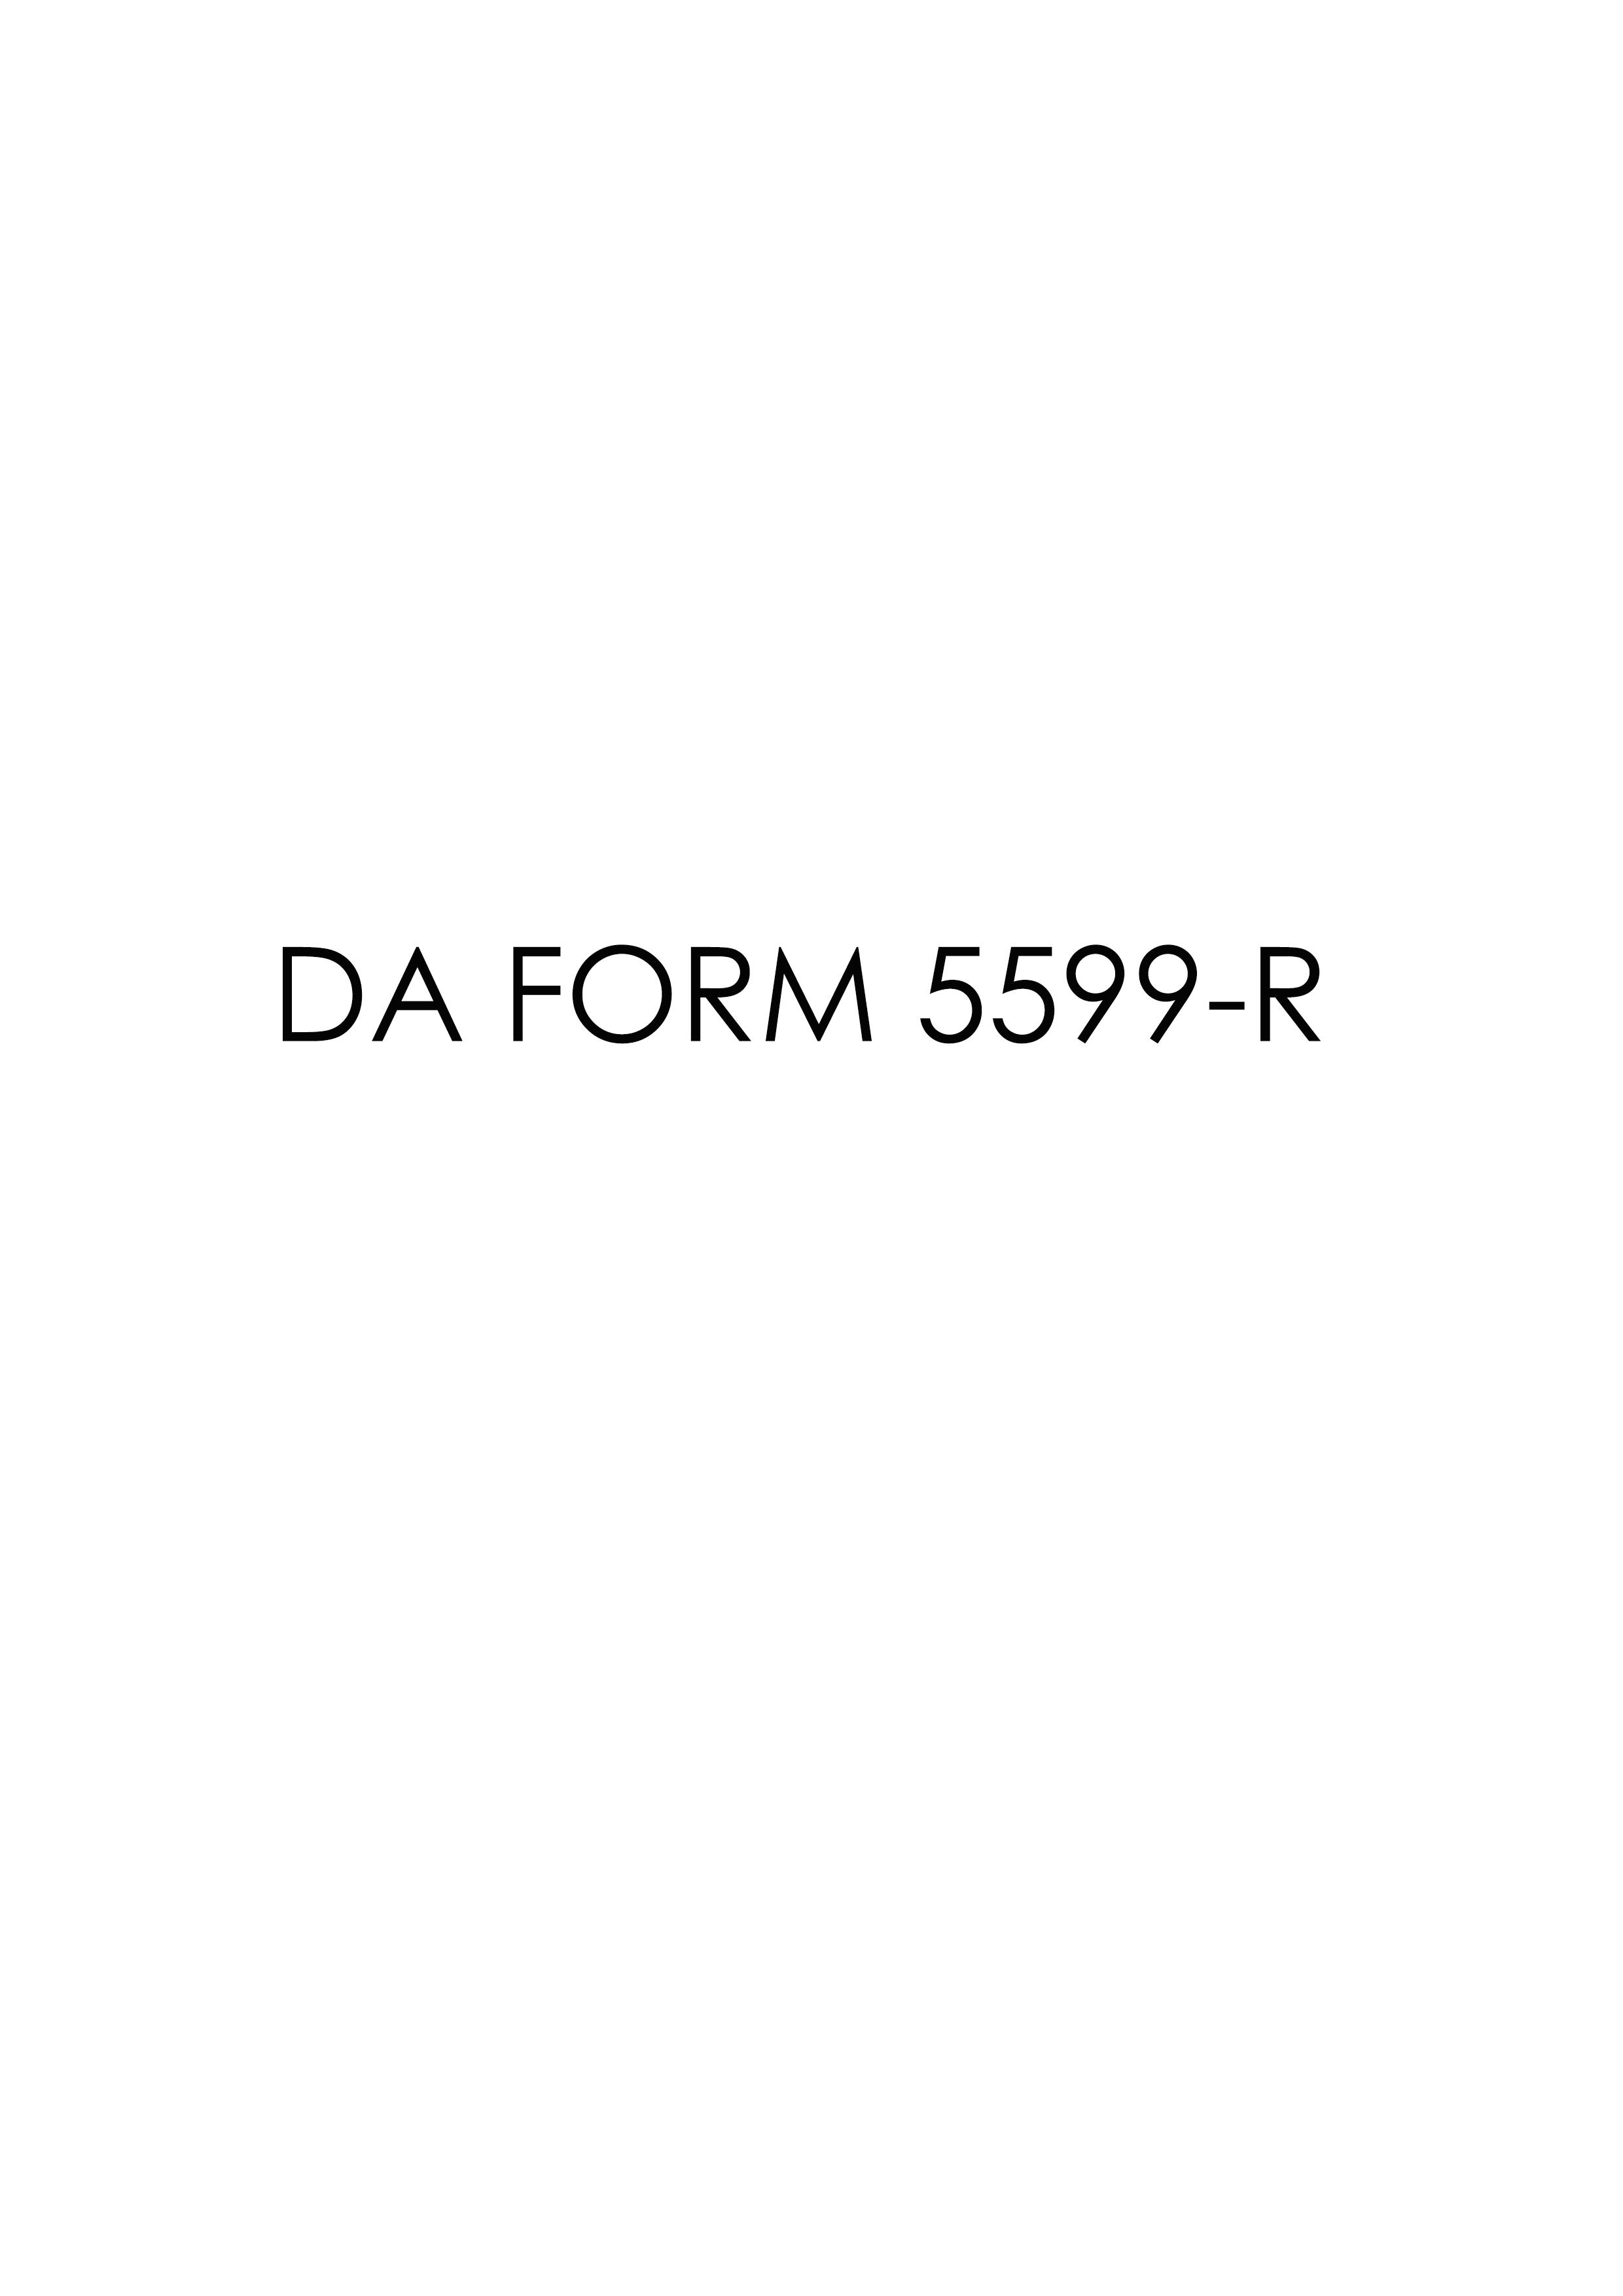 Download Fillable da Form 5599-R